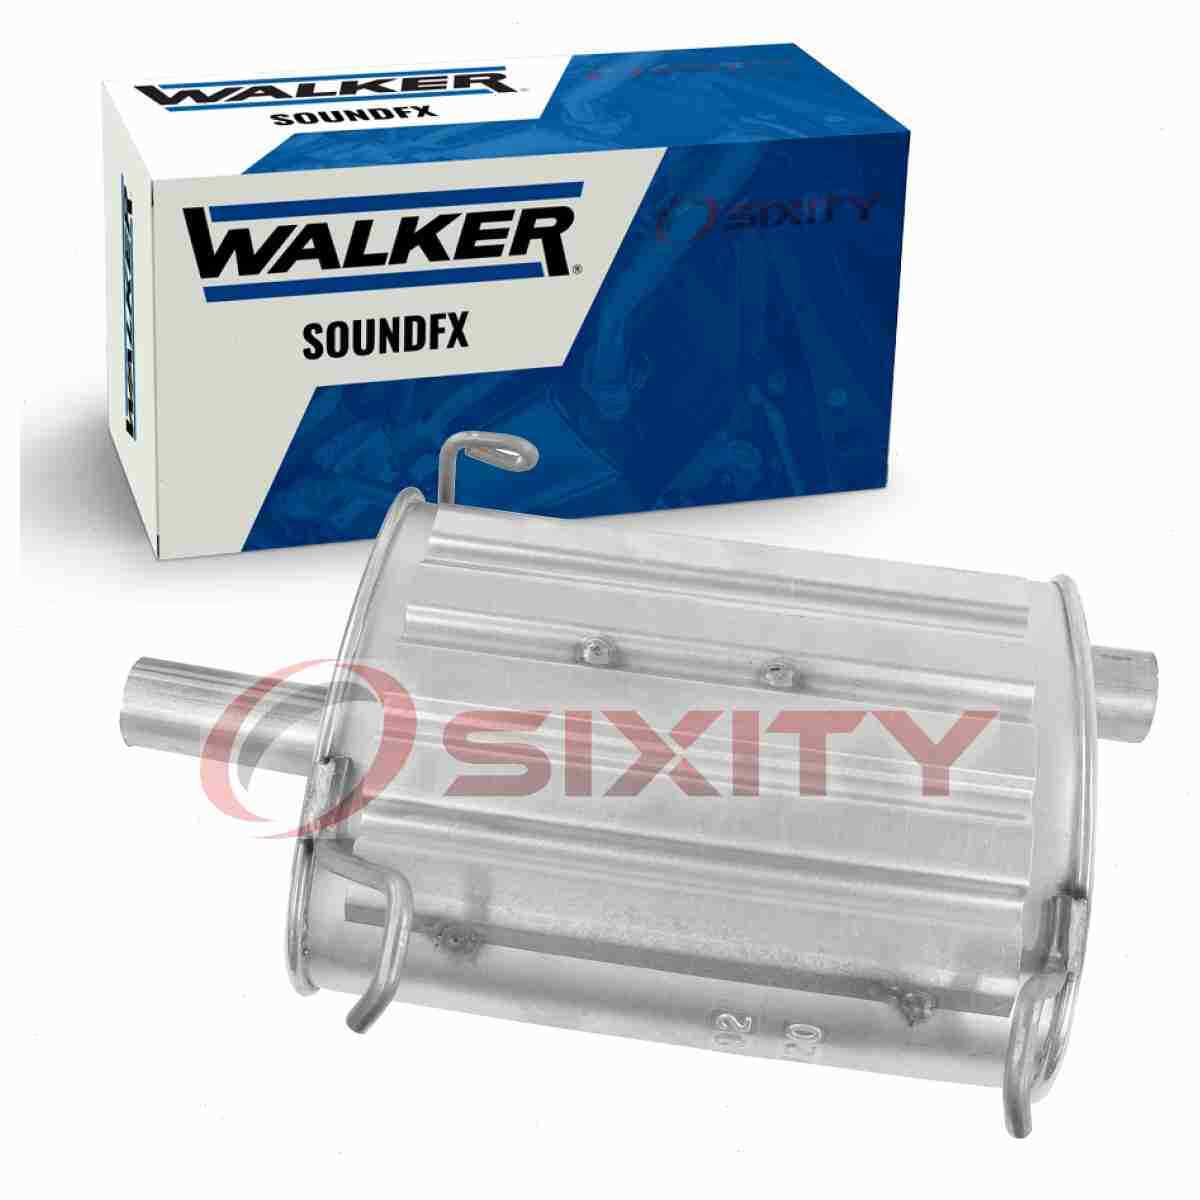 Walker SoundFX Exhaust Muffler for 1990-1994 Suzuki Swift 1.3L L4 Mufflers  oj